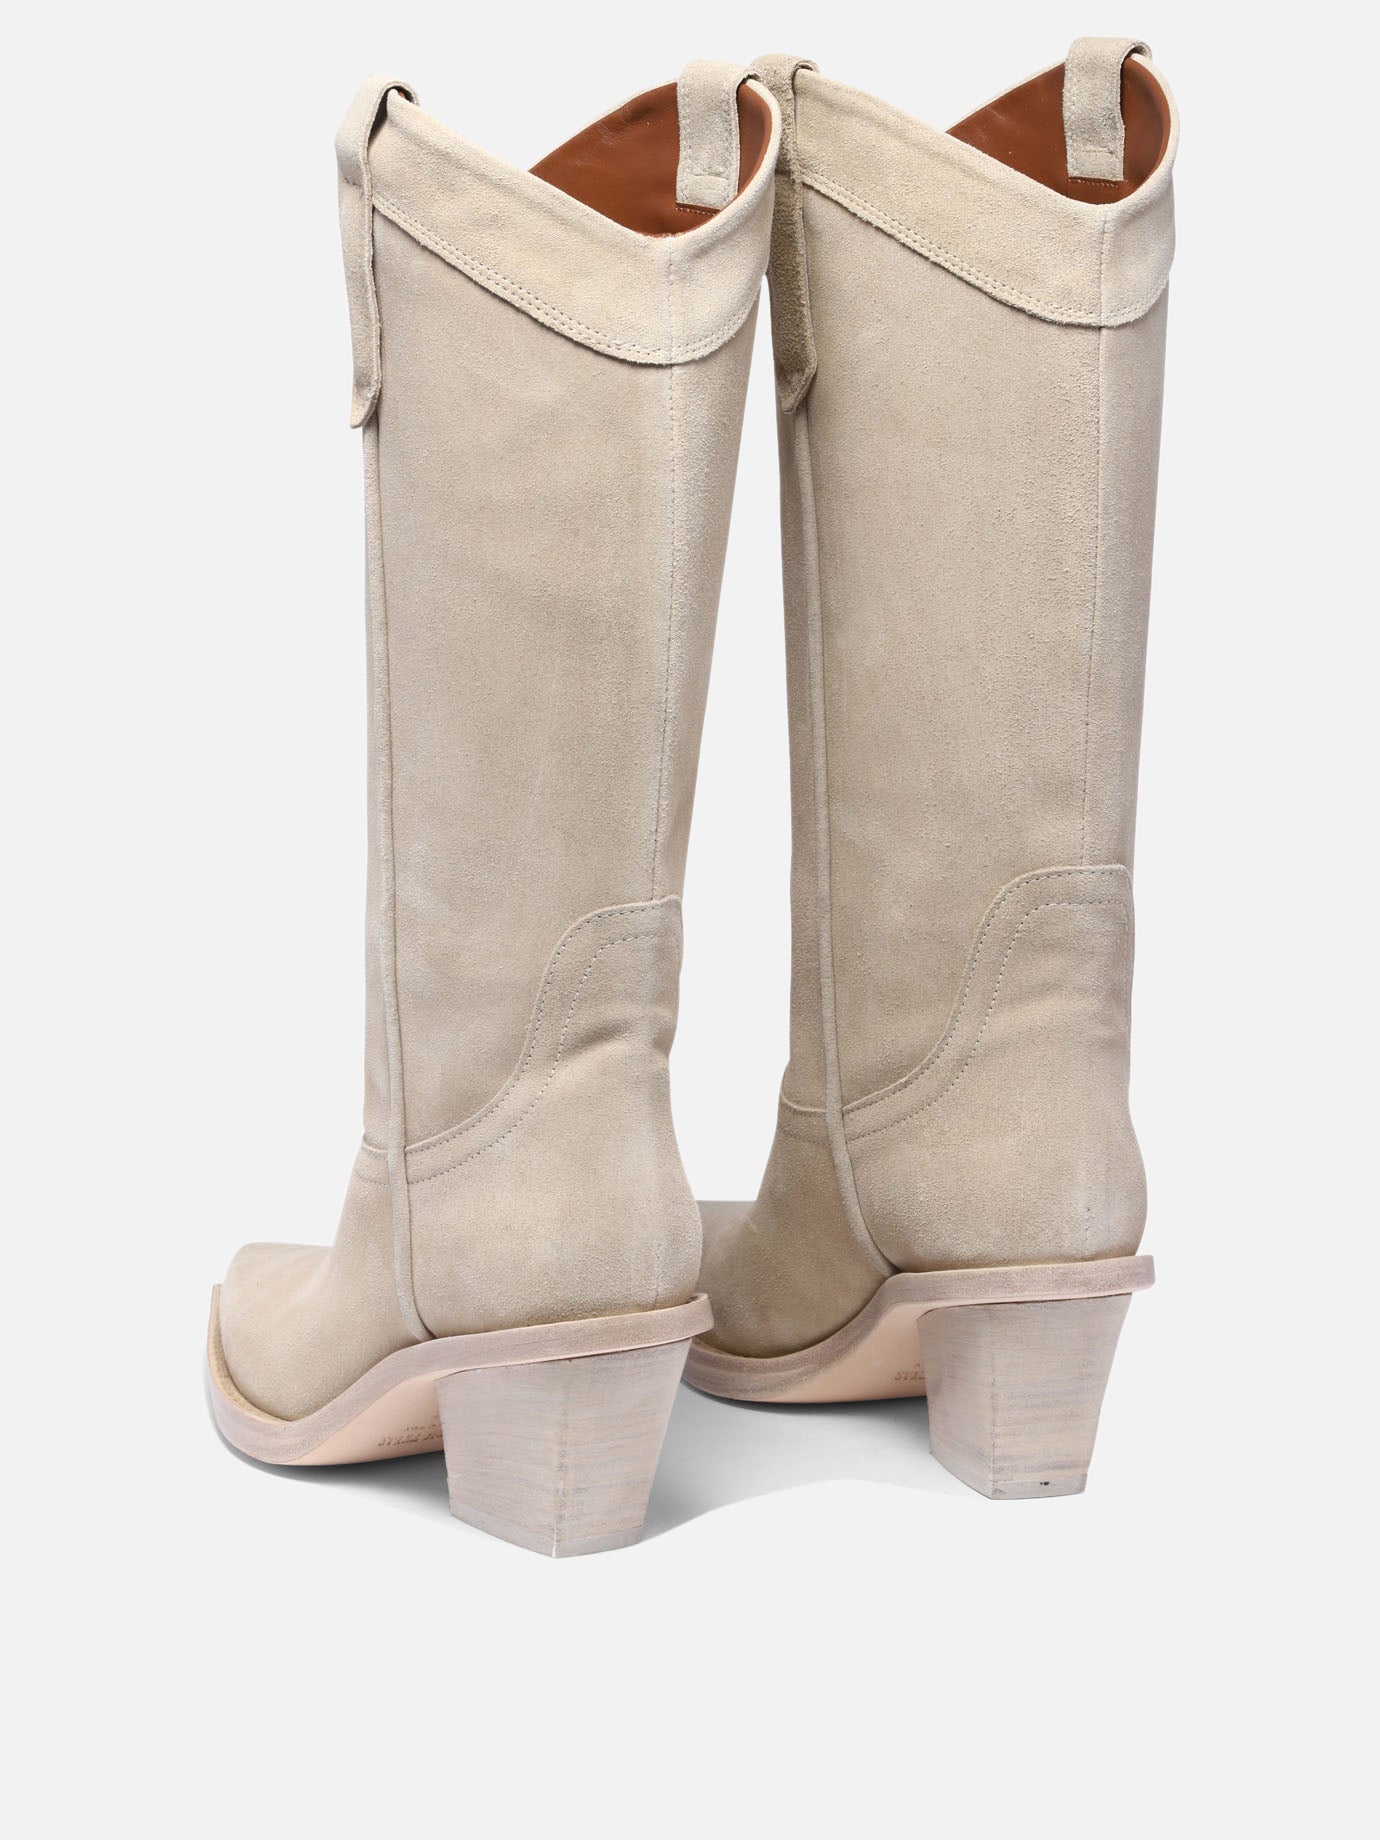 "Dakota" boots